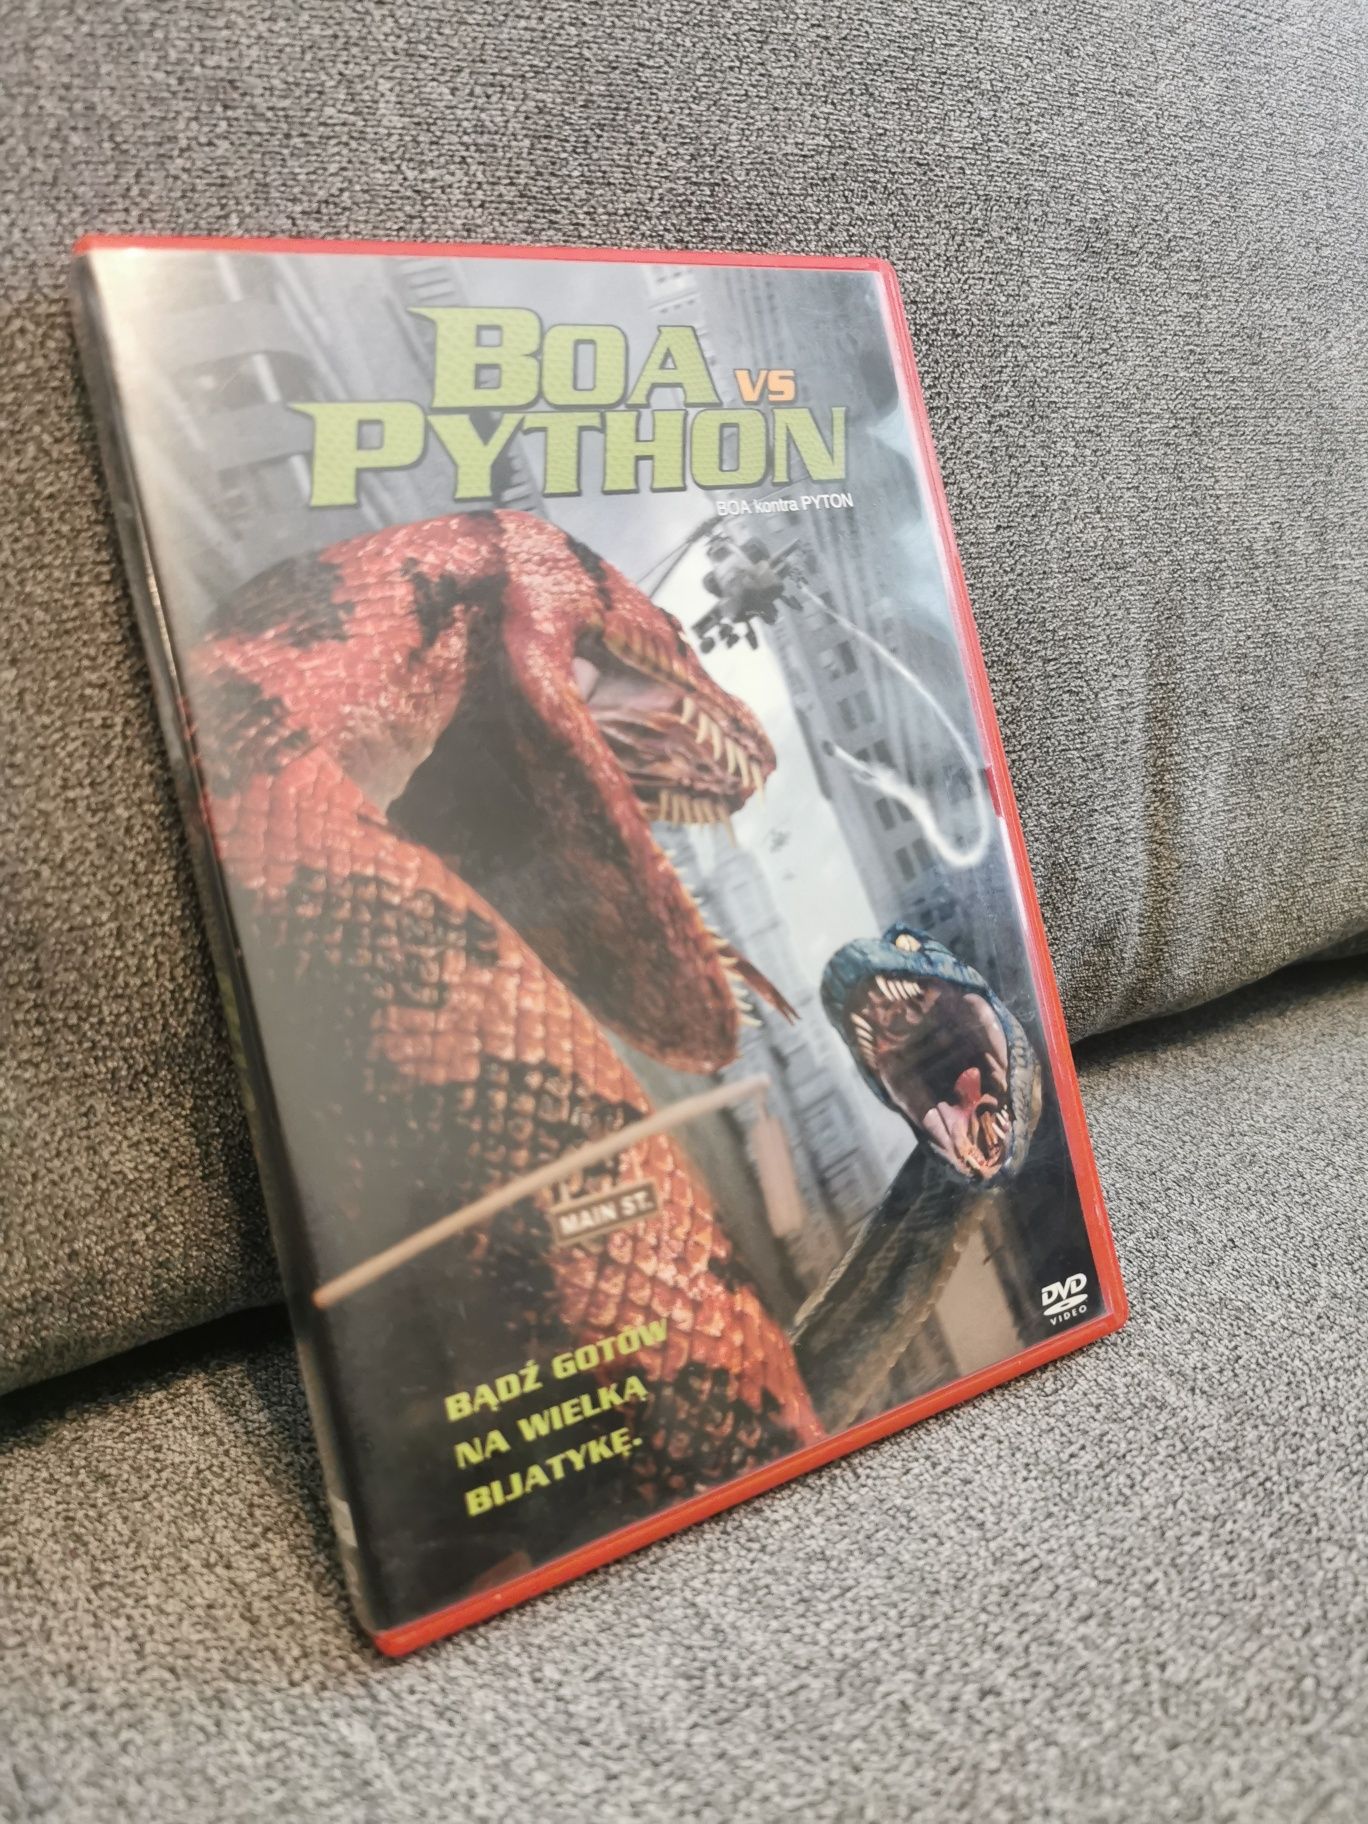 Boa Vs Python DVD